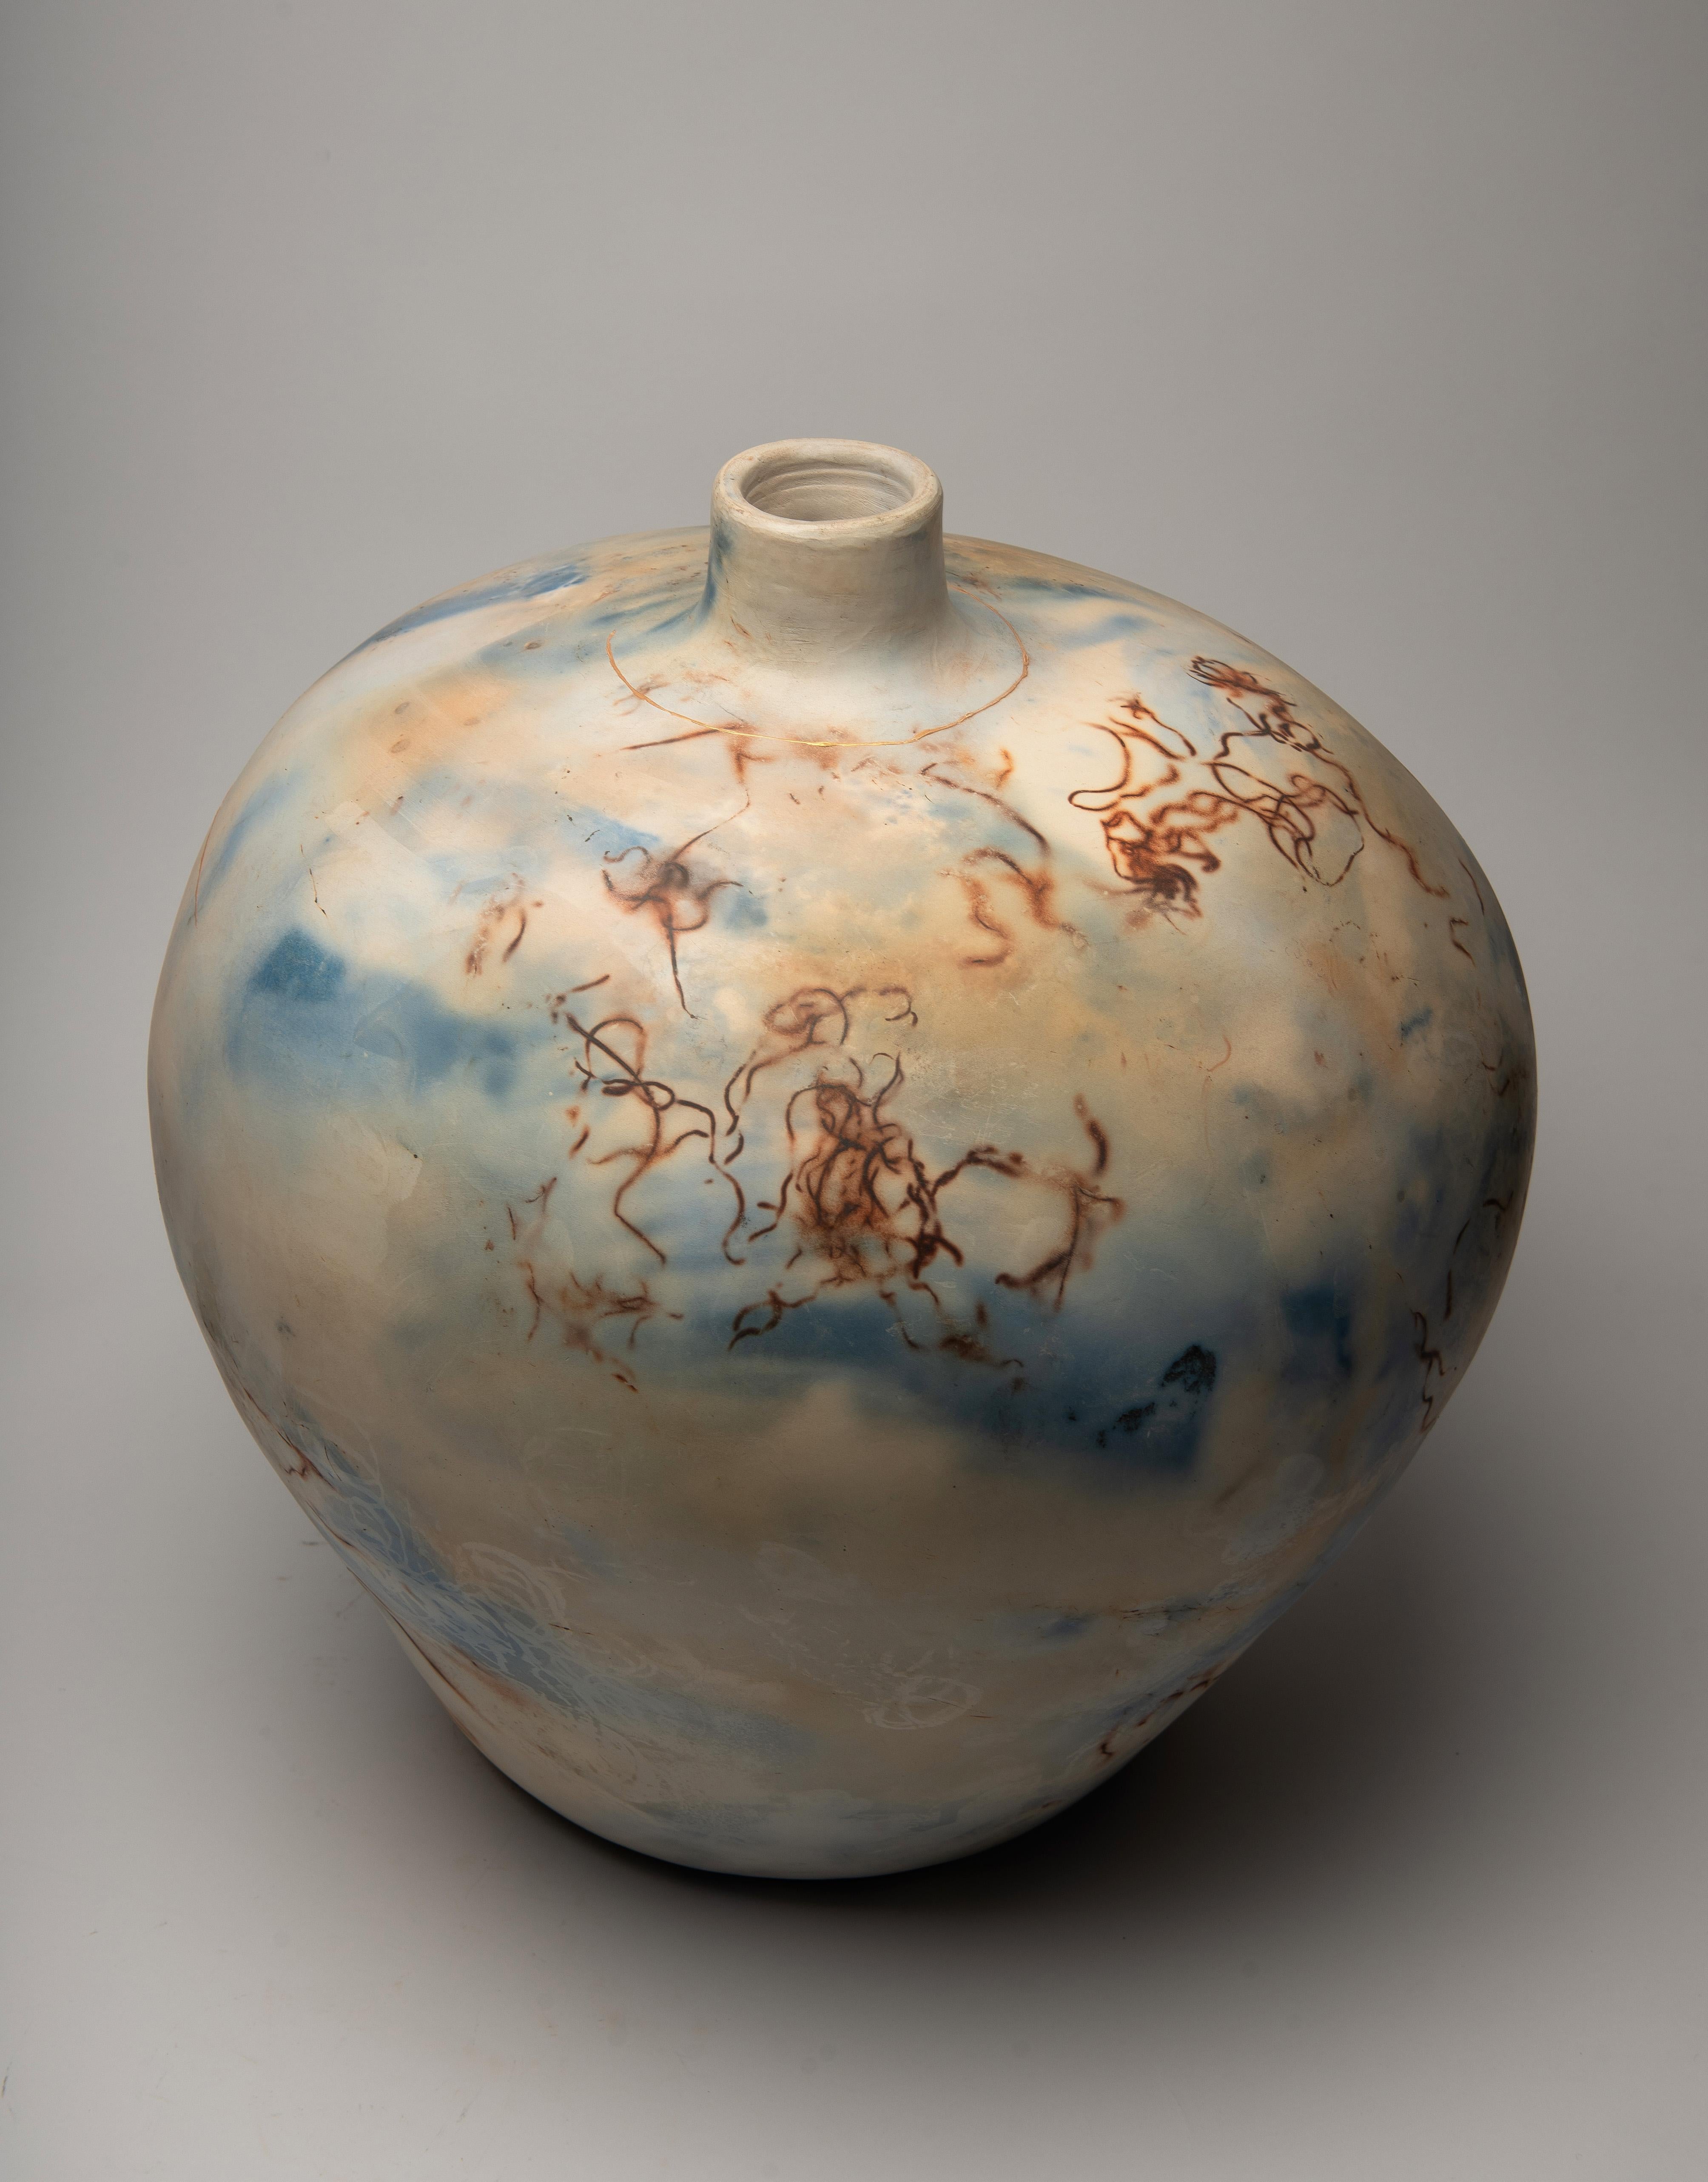 Alison Brannen Nude Sculpture - "Floating Blue Moon Jar", ceramic sculpture, porcelain vase, blue, ochre, neck